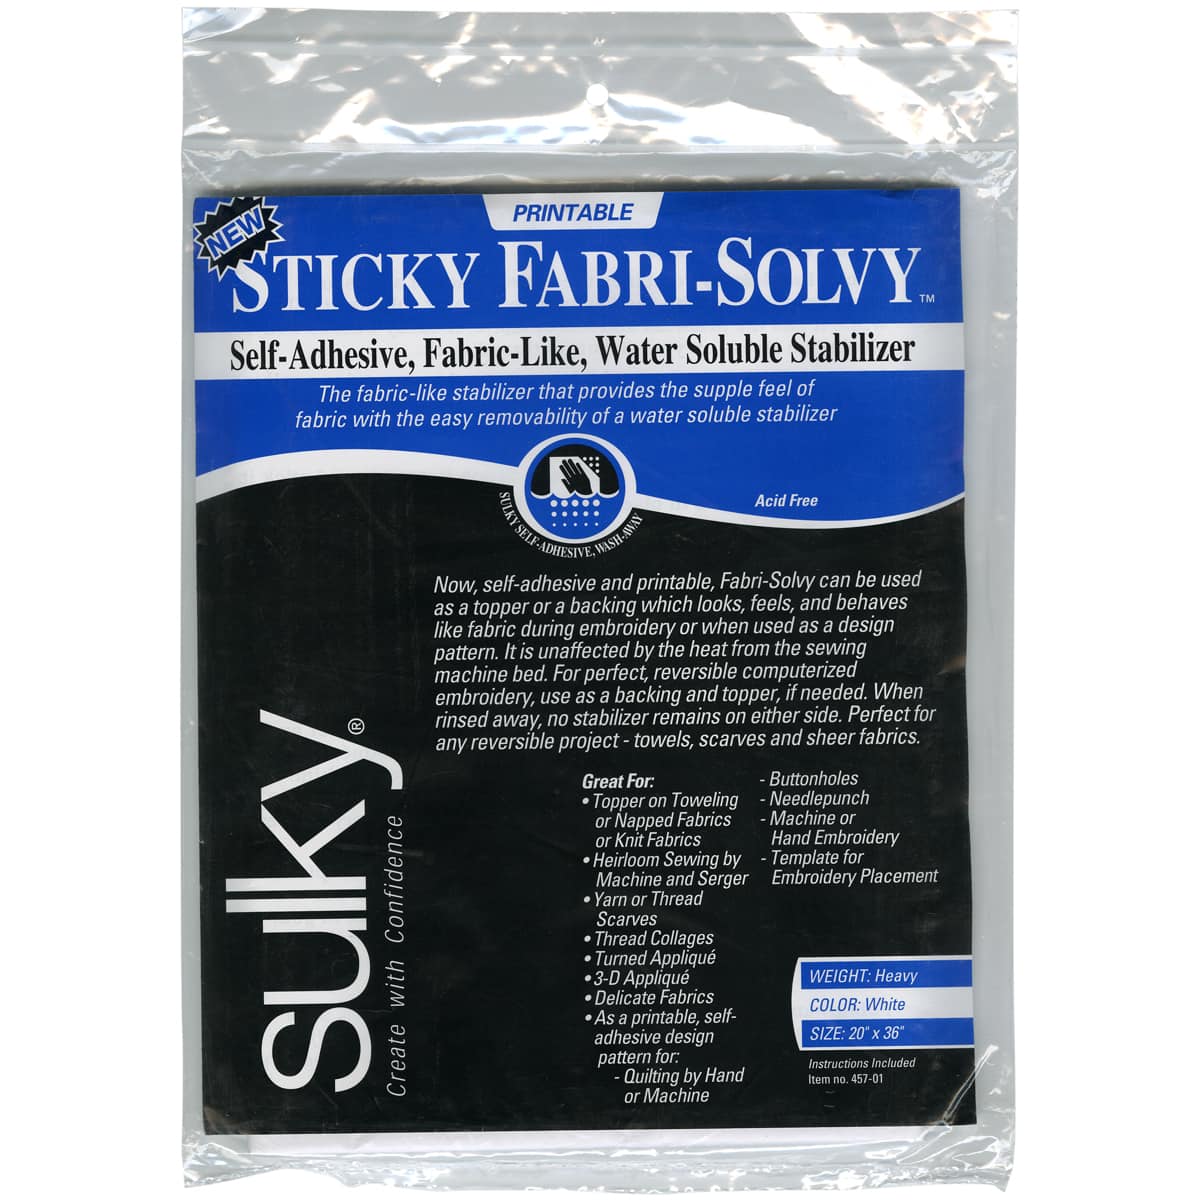 Sulky Sticky Fabri-Solvy Fabric Stabilizer, 20 by 36-inch 